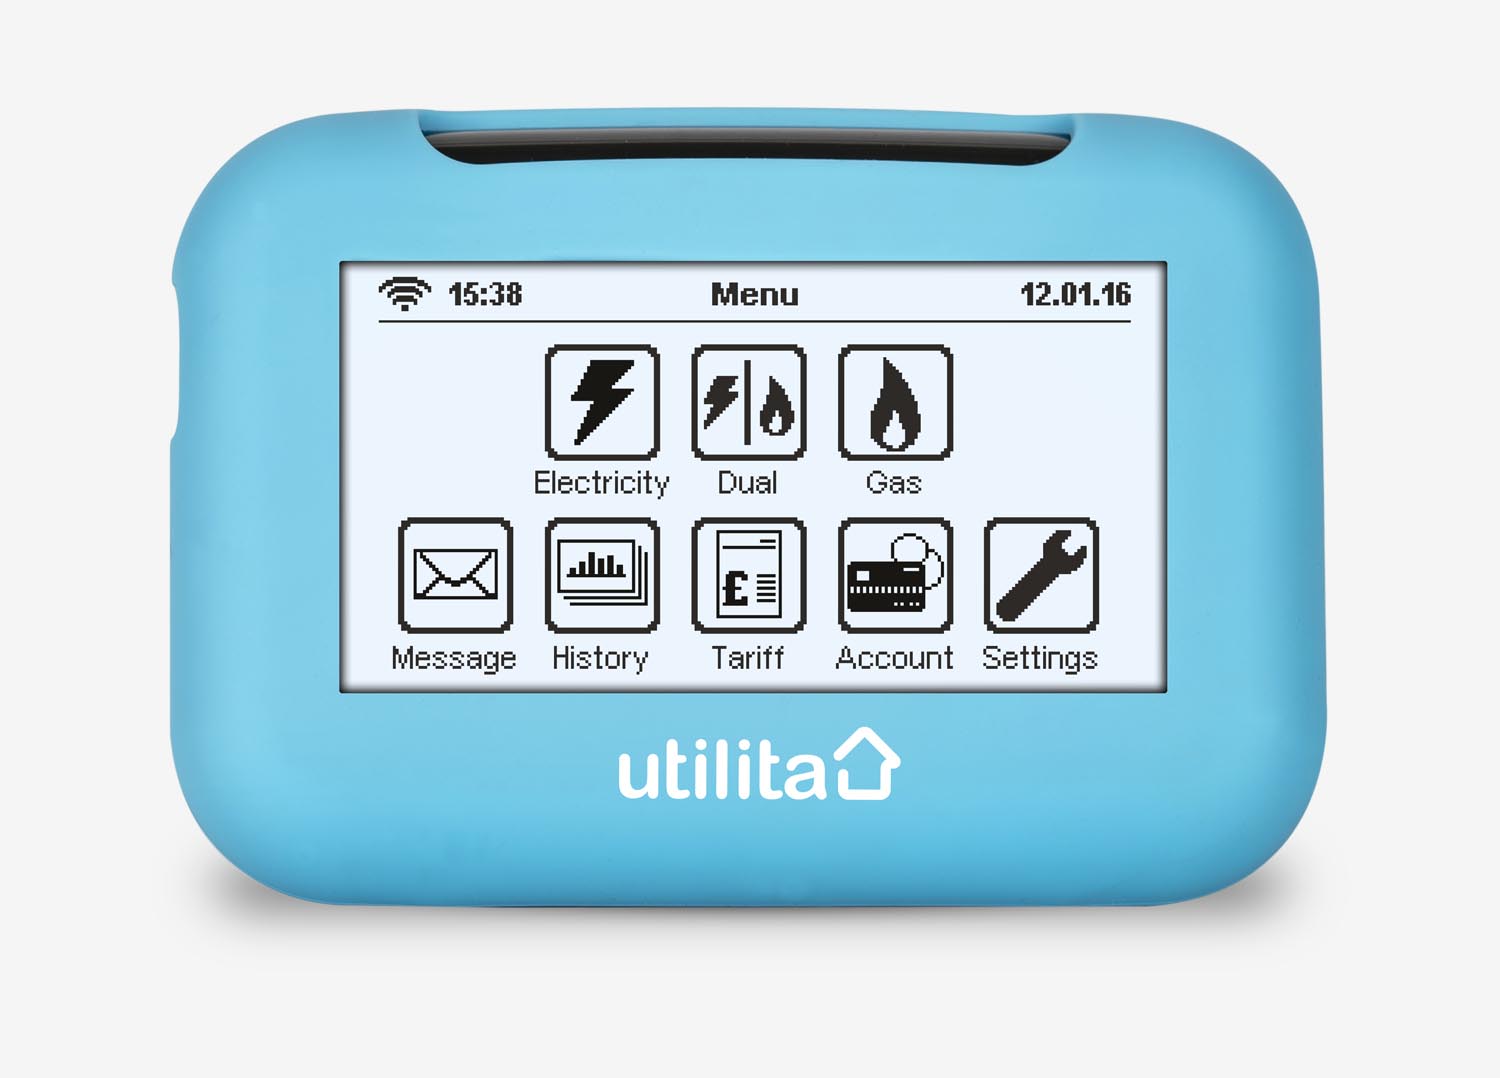 utility warehouse smart meter manual